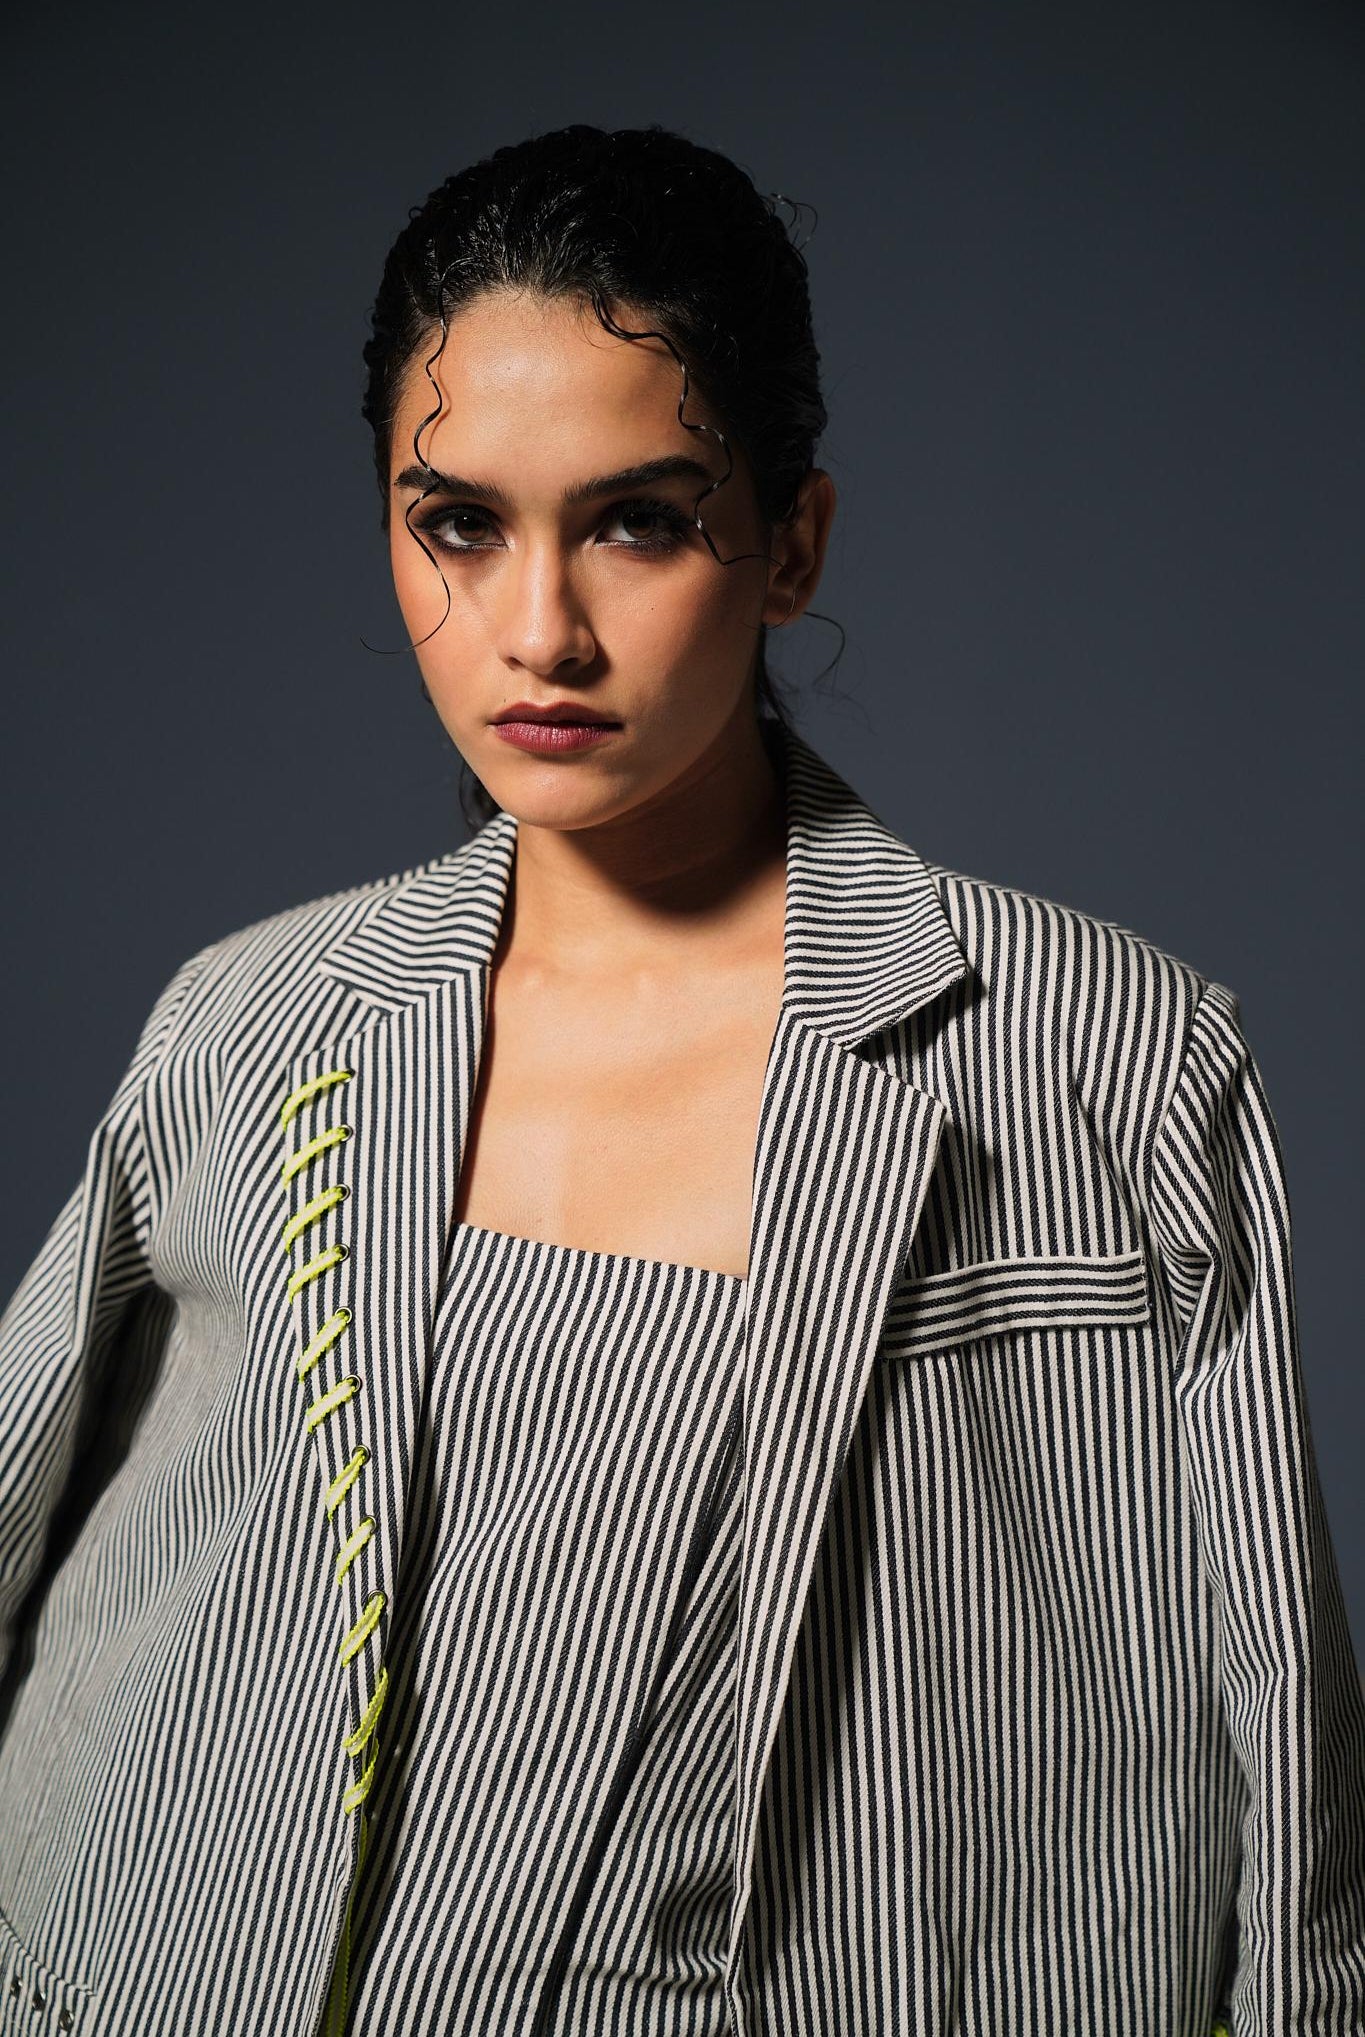 Striped Oversized Blazer With Fitted Short Dress Set - CiceroniCo-ord SetPriyanca Khanna